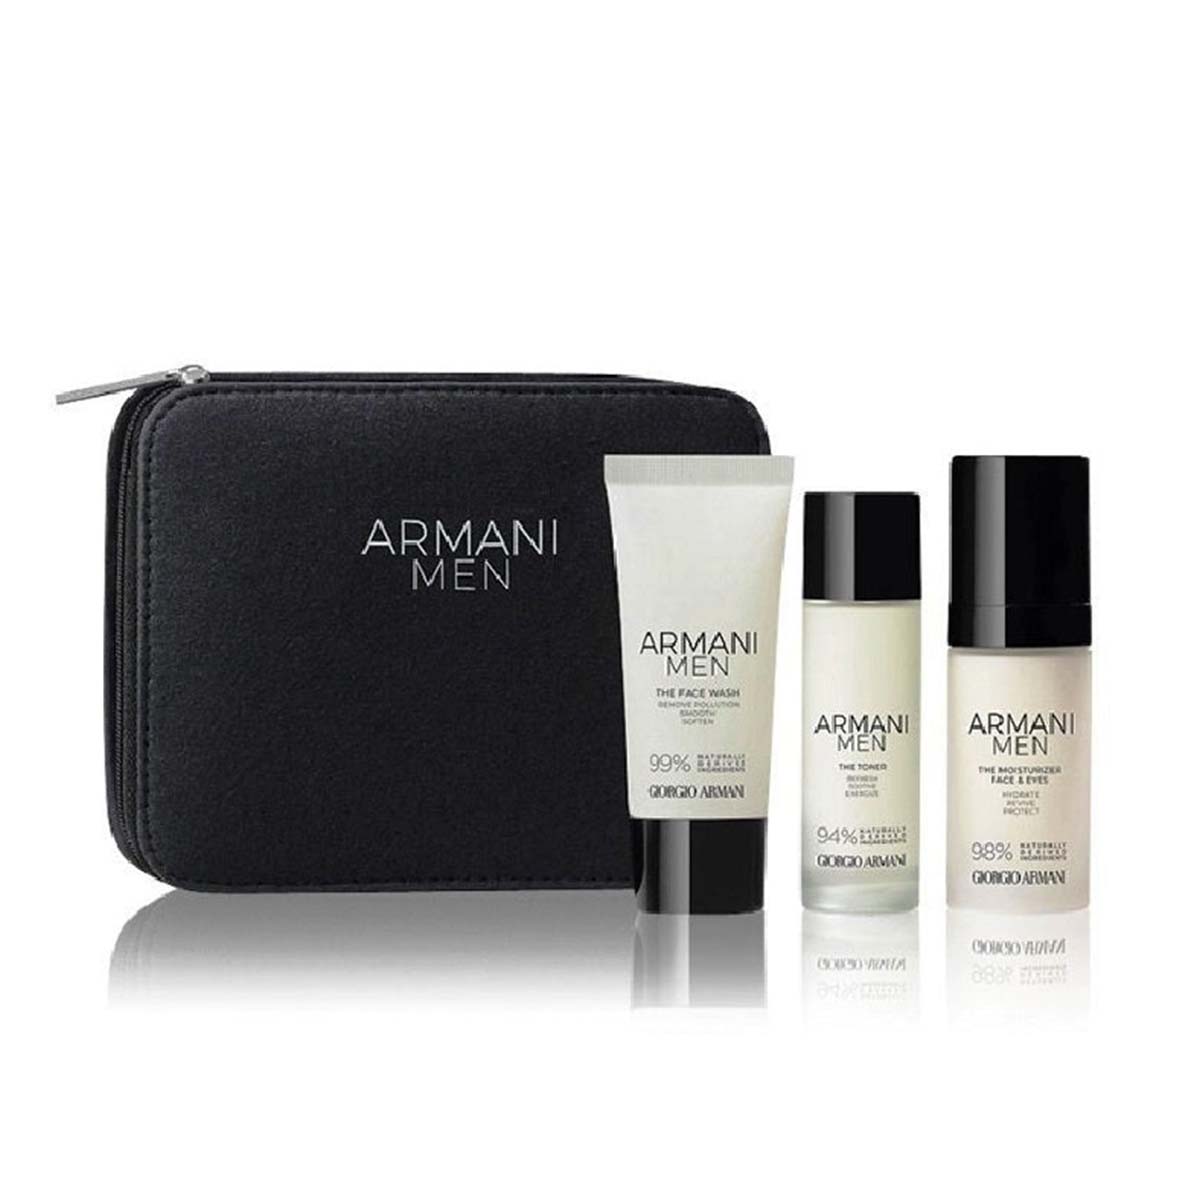 Giorgio Armani Men Skincare Travel Kit | My Perfume Shop Australia